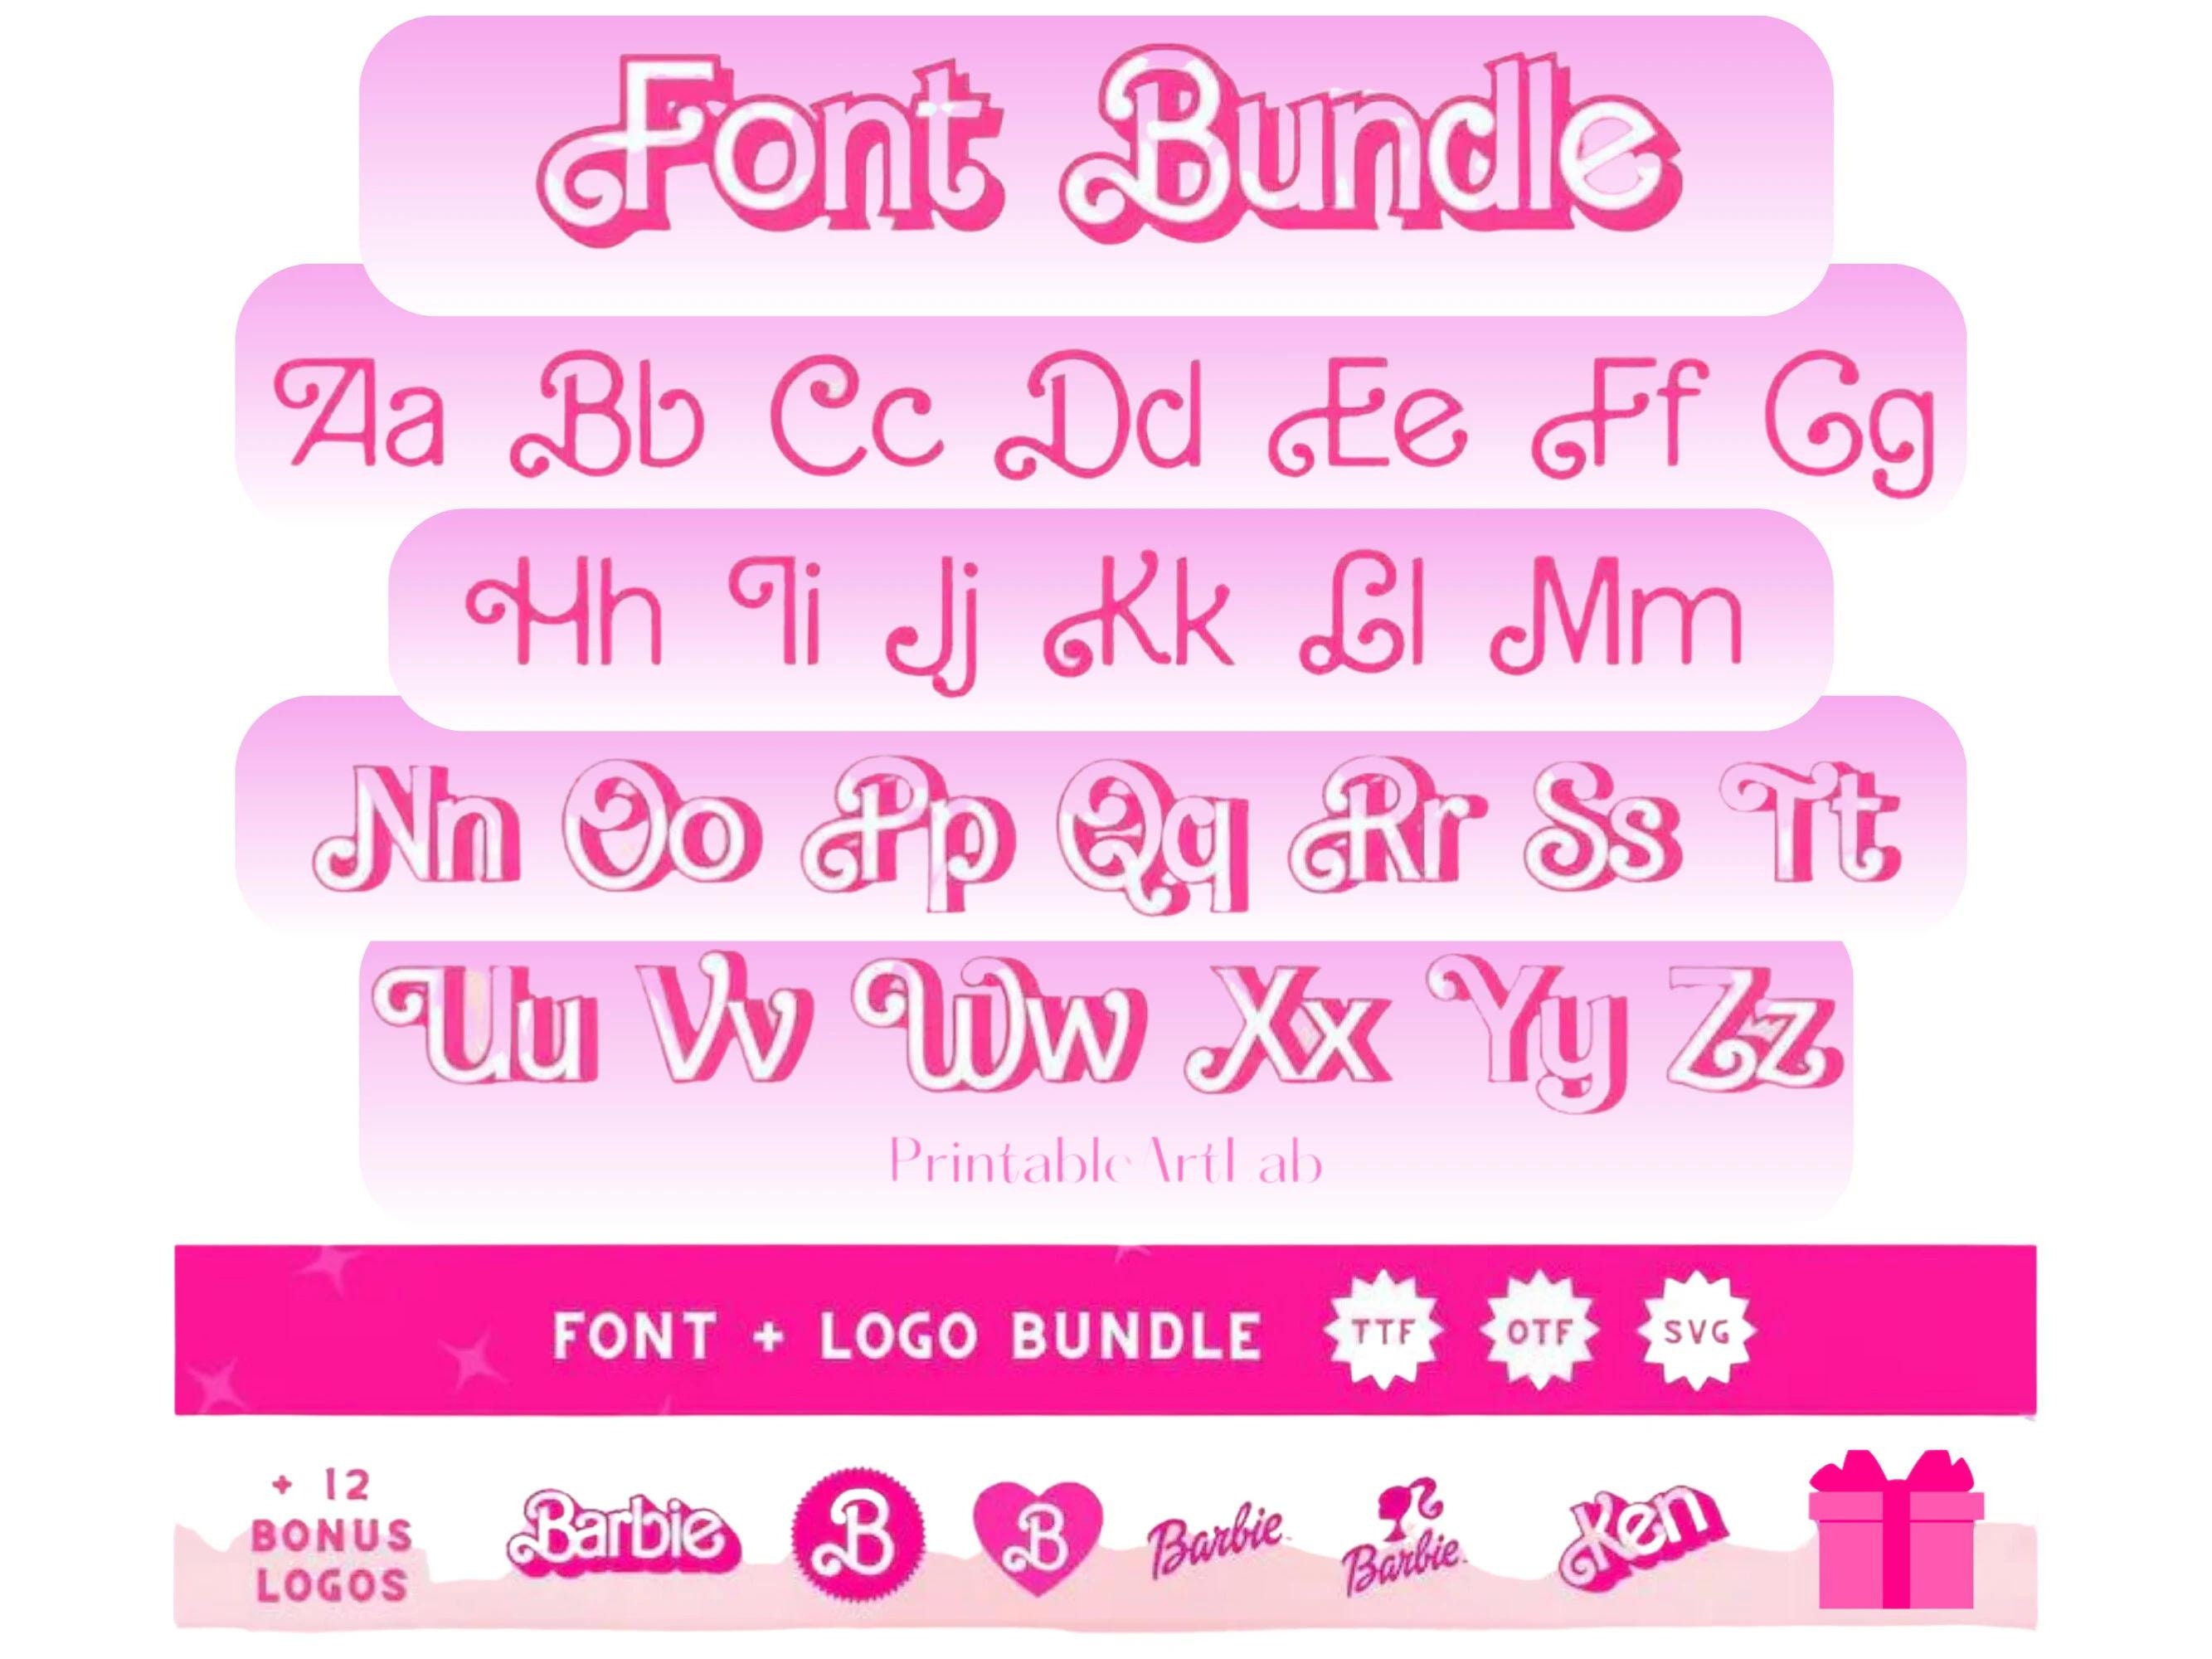 Barbie bundle 2 installable fonts numbers digital file 55 printable Clipart  SVG